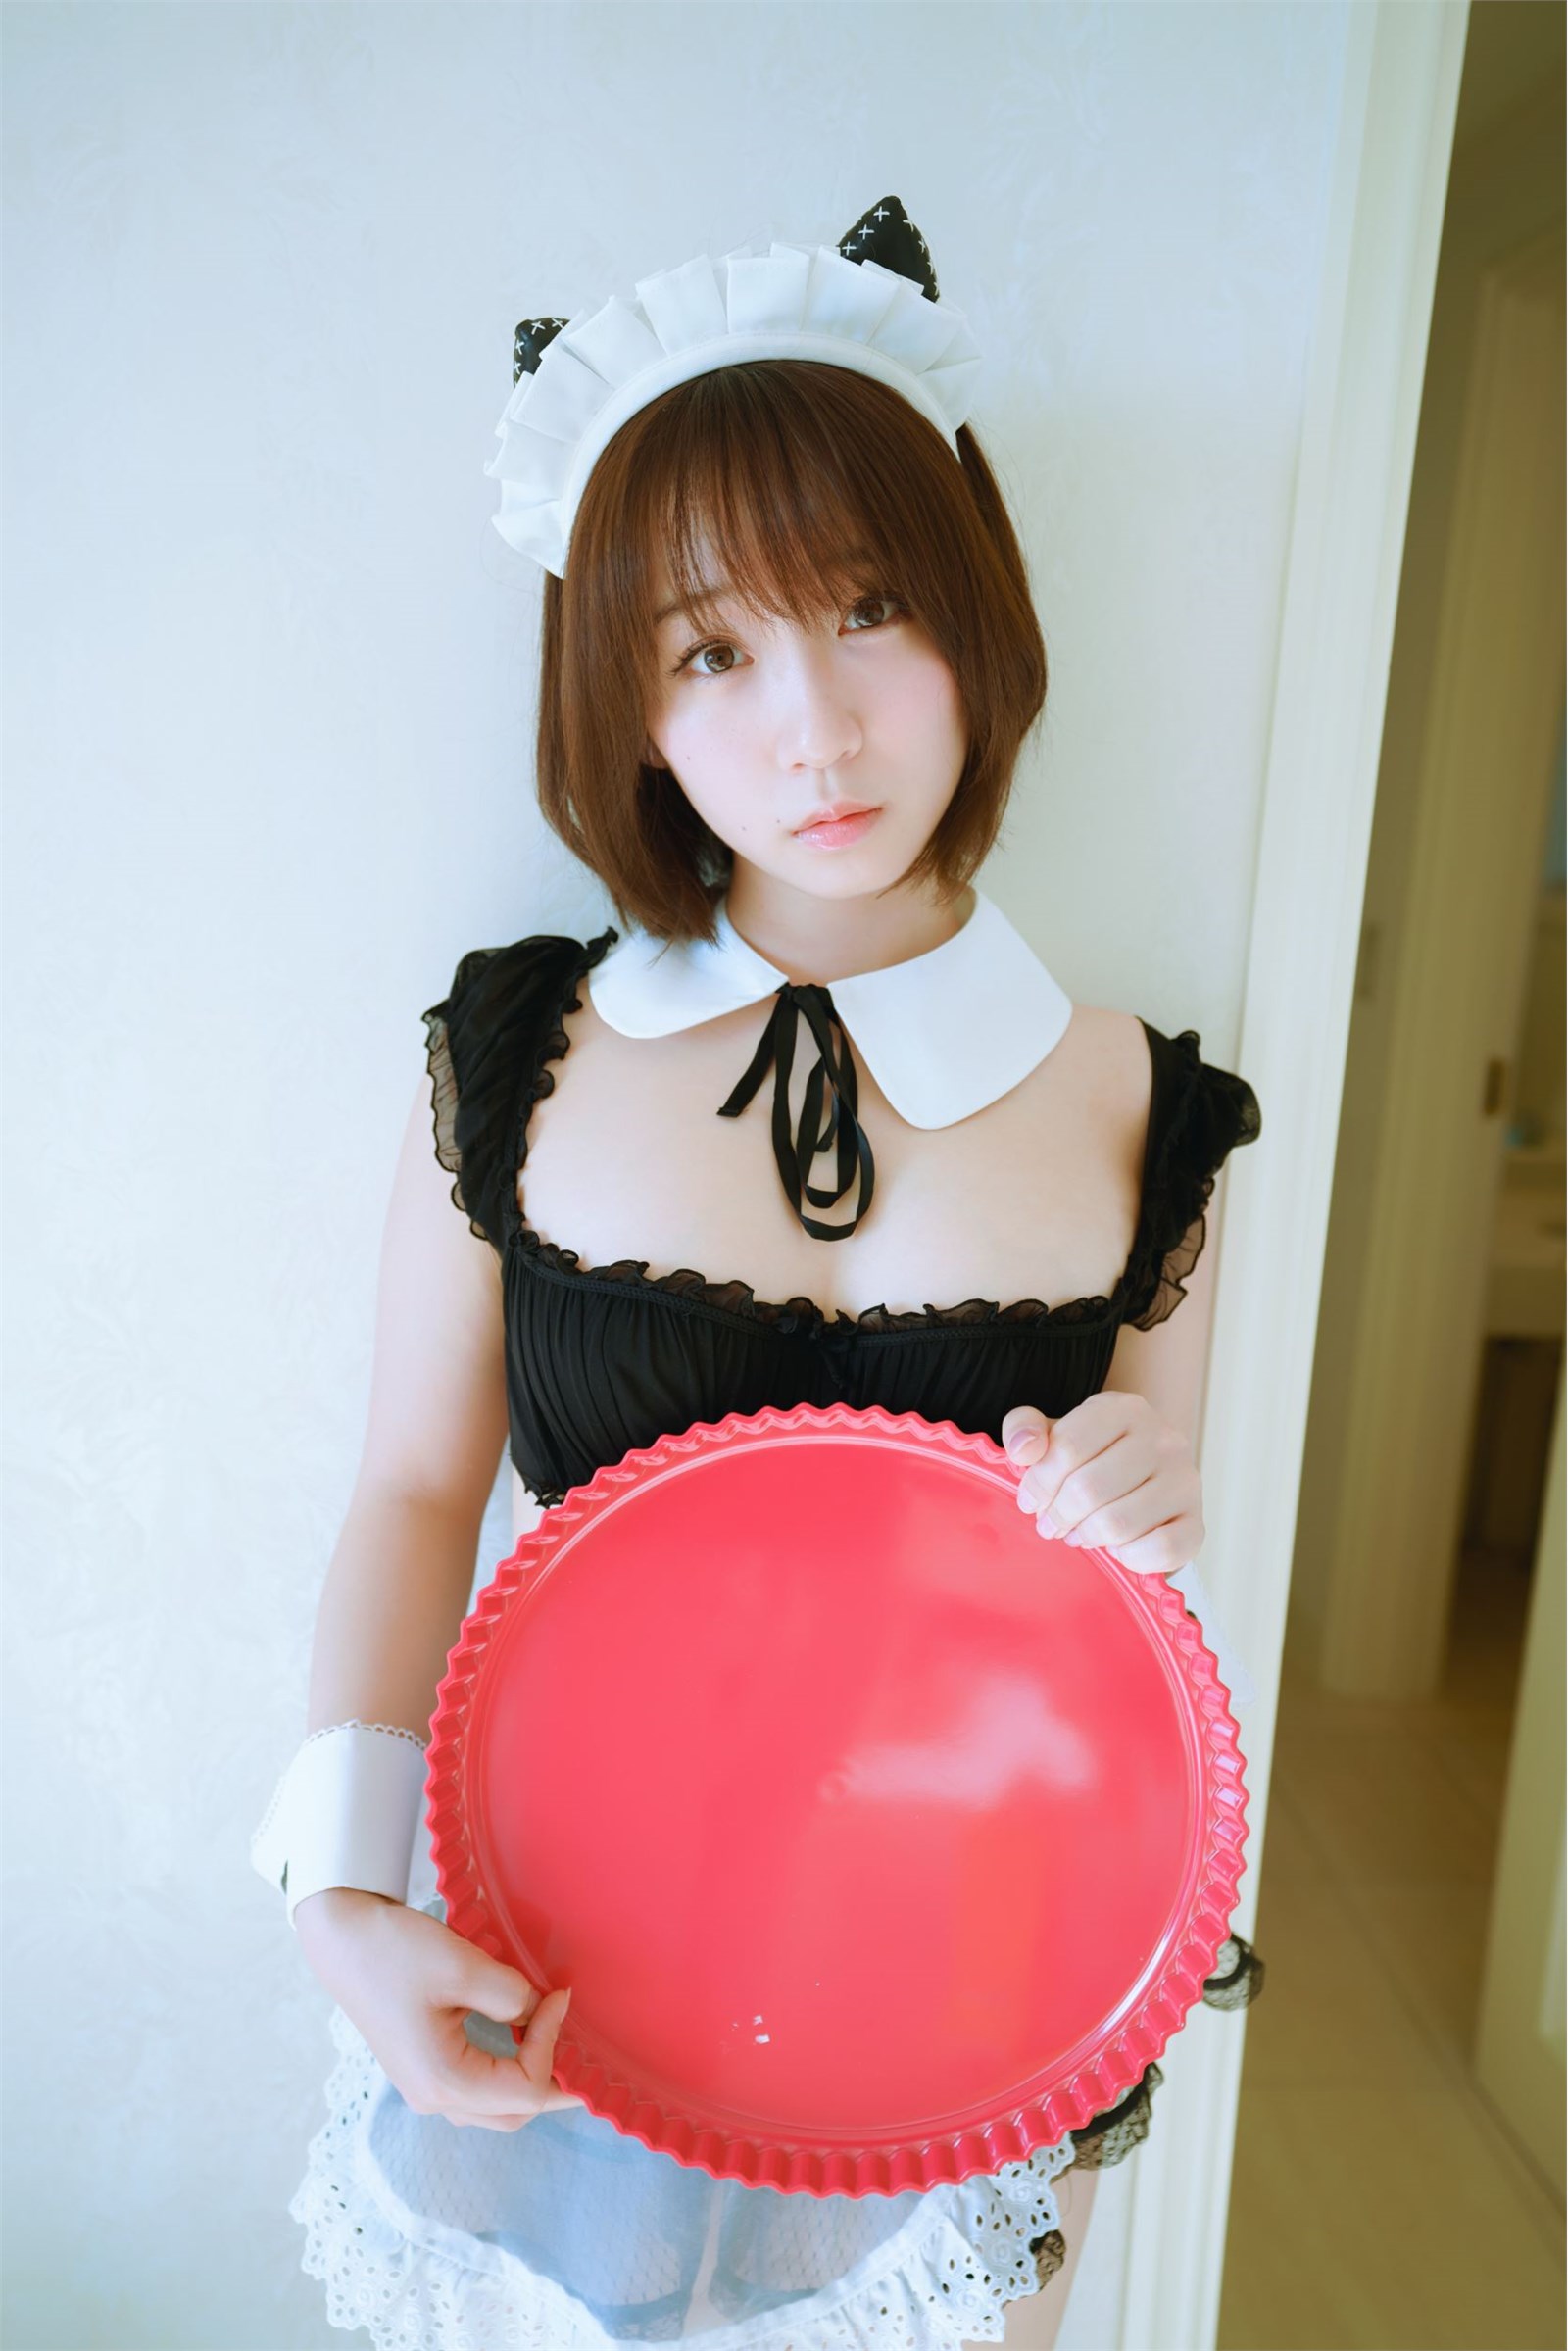 (I) maid ori looking for Iori Momoe(6)